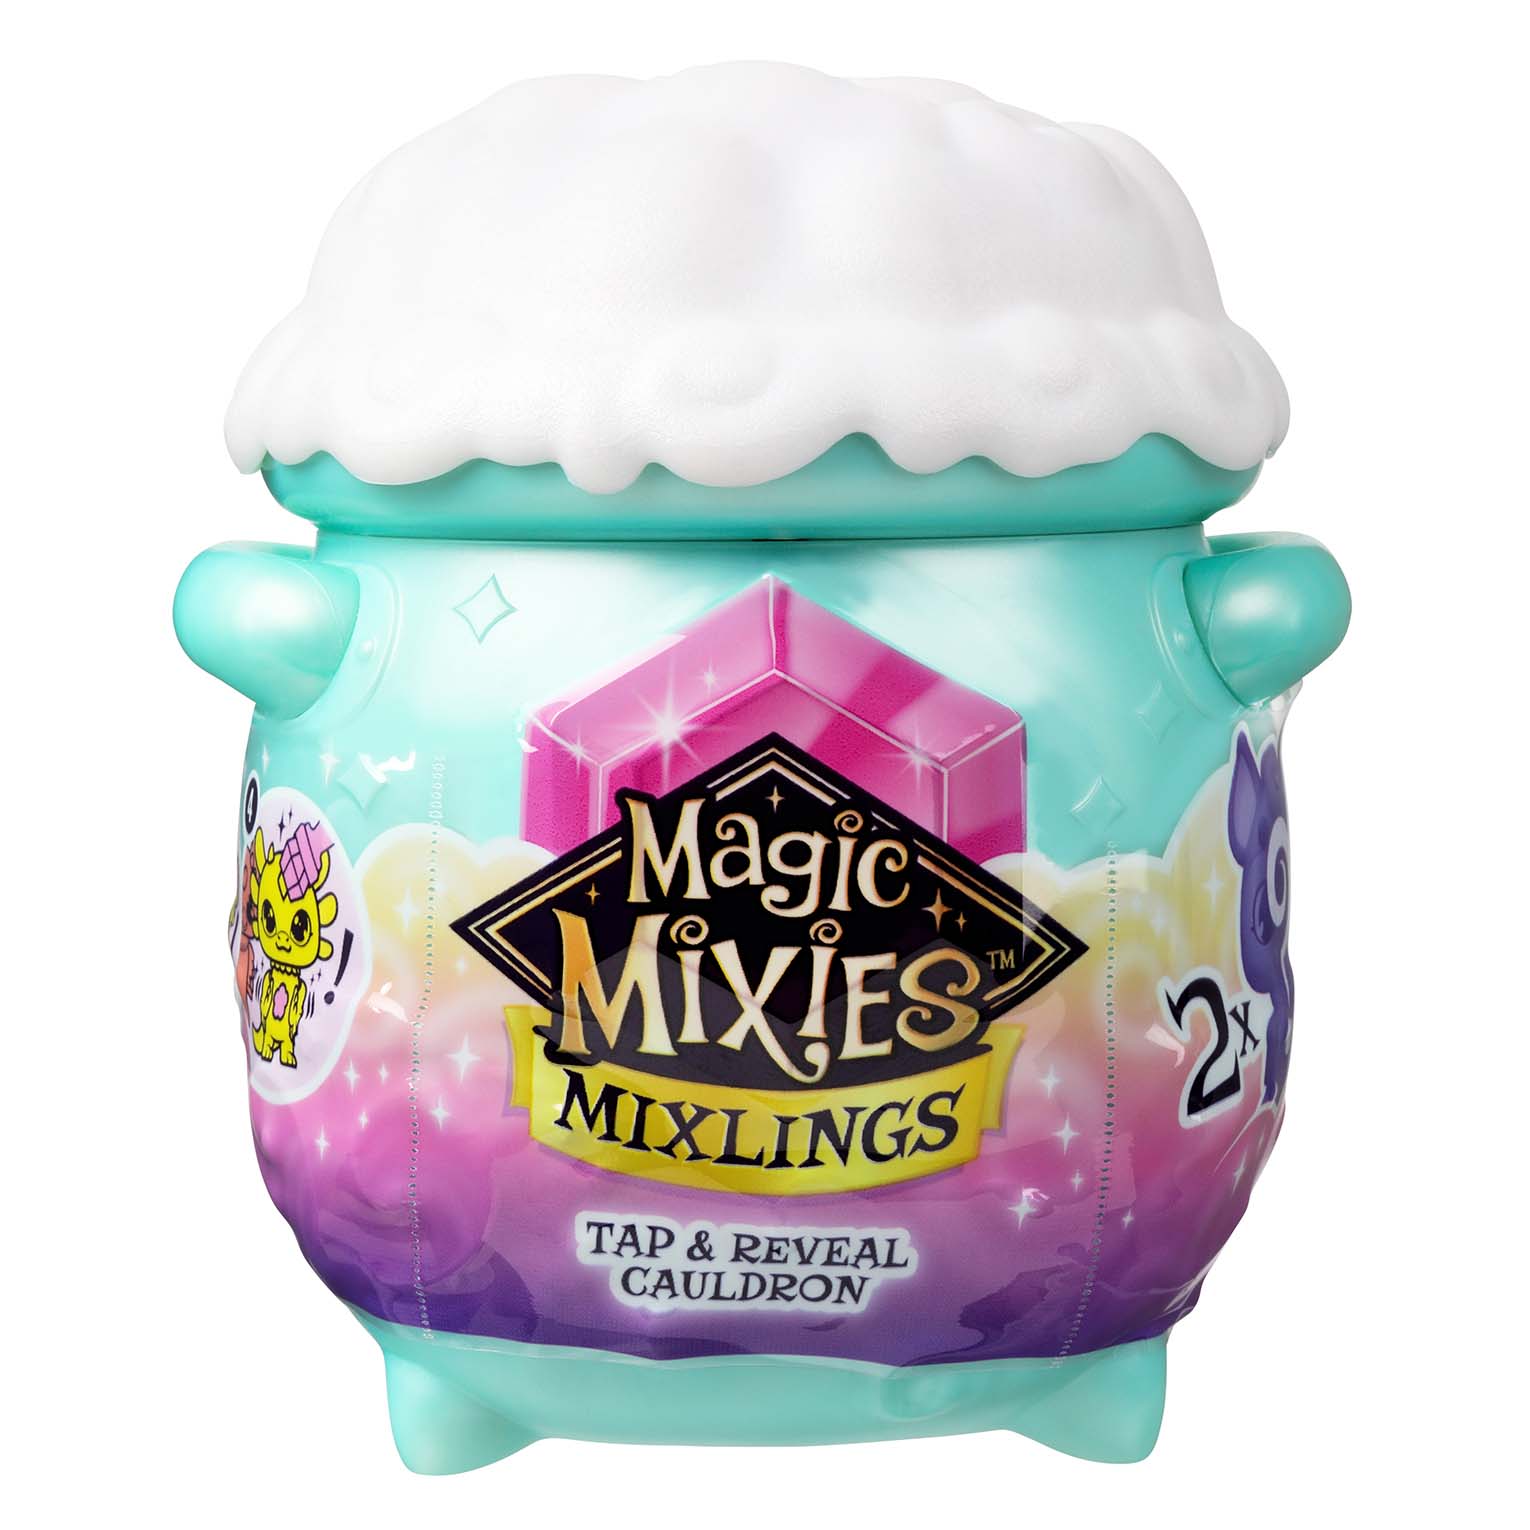 Magic Mixies Mixlings - Tik & Ontdek Ketel (Duo pack)